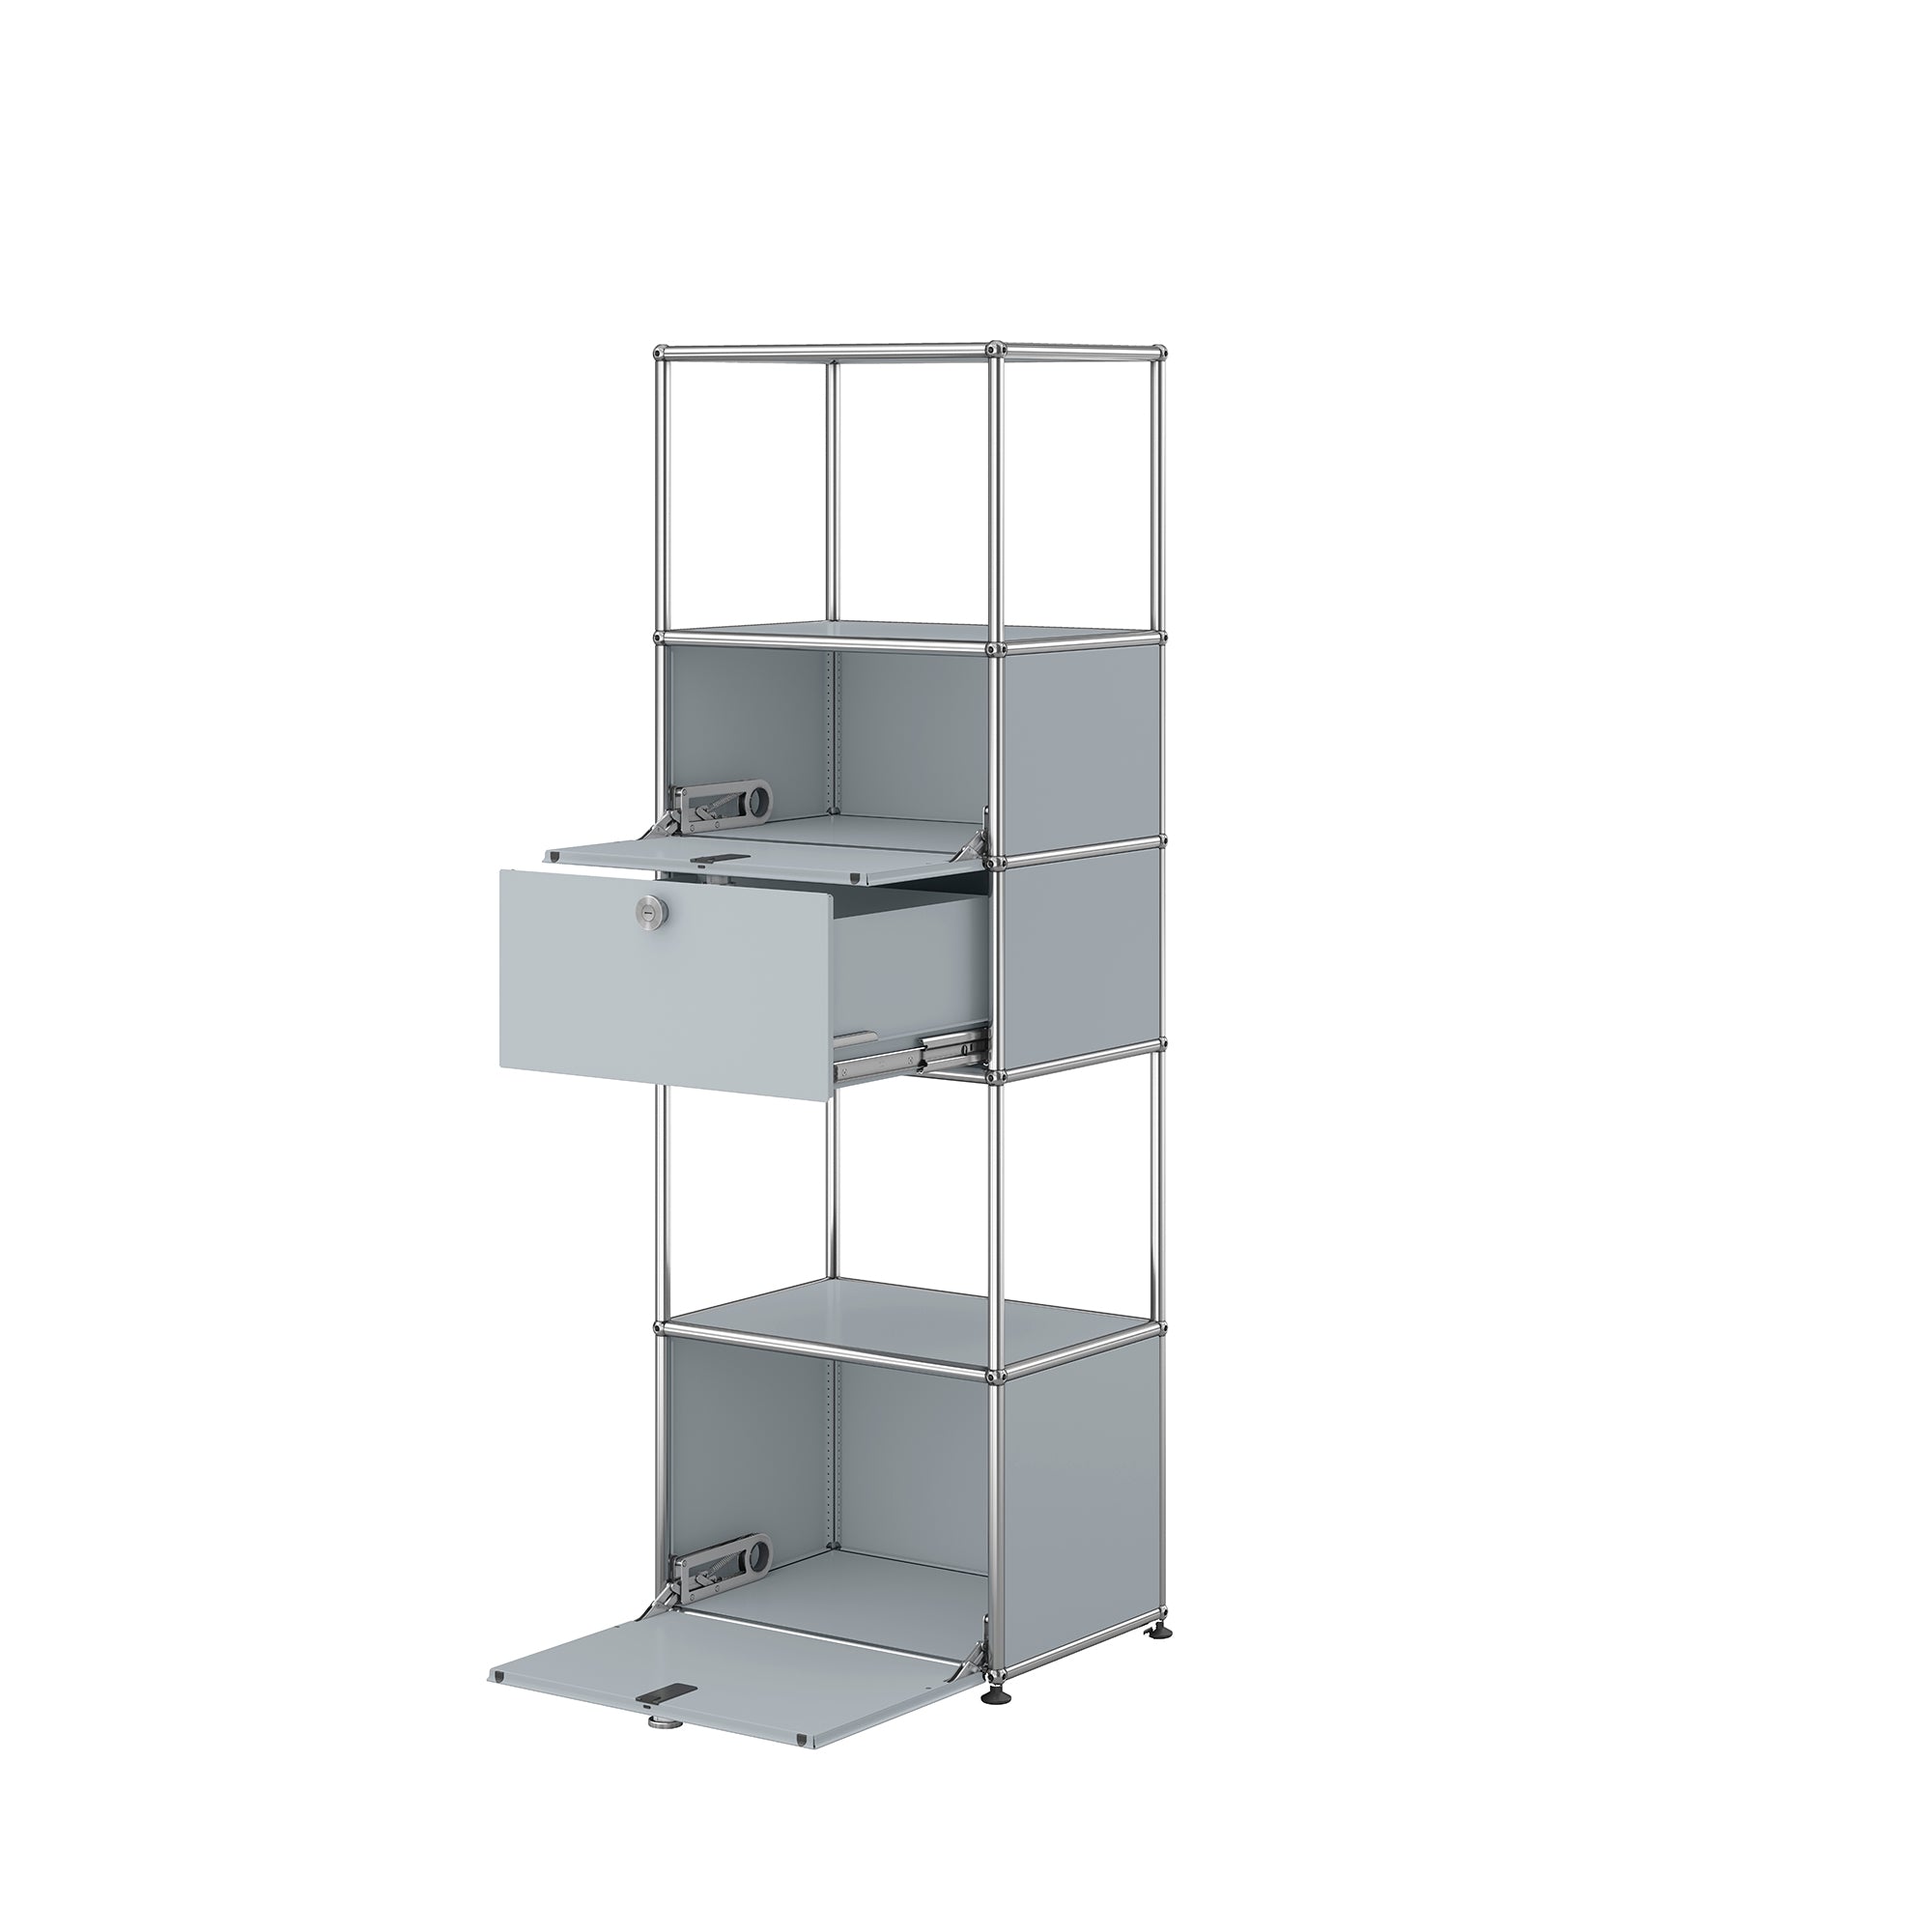 Haller cabinet modular config. 12